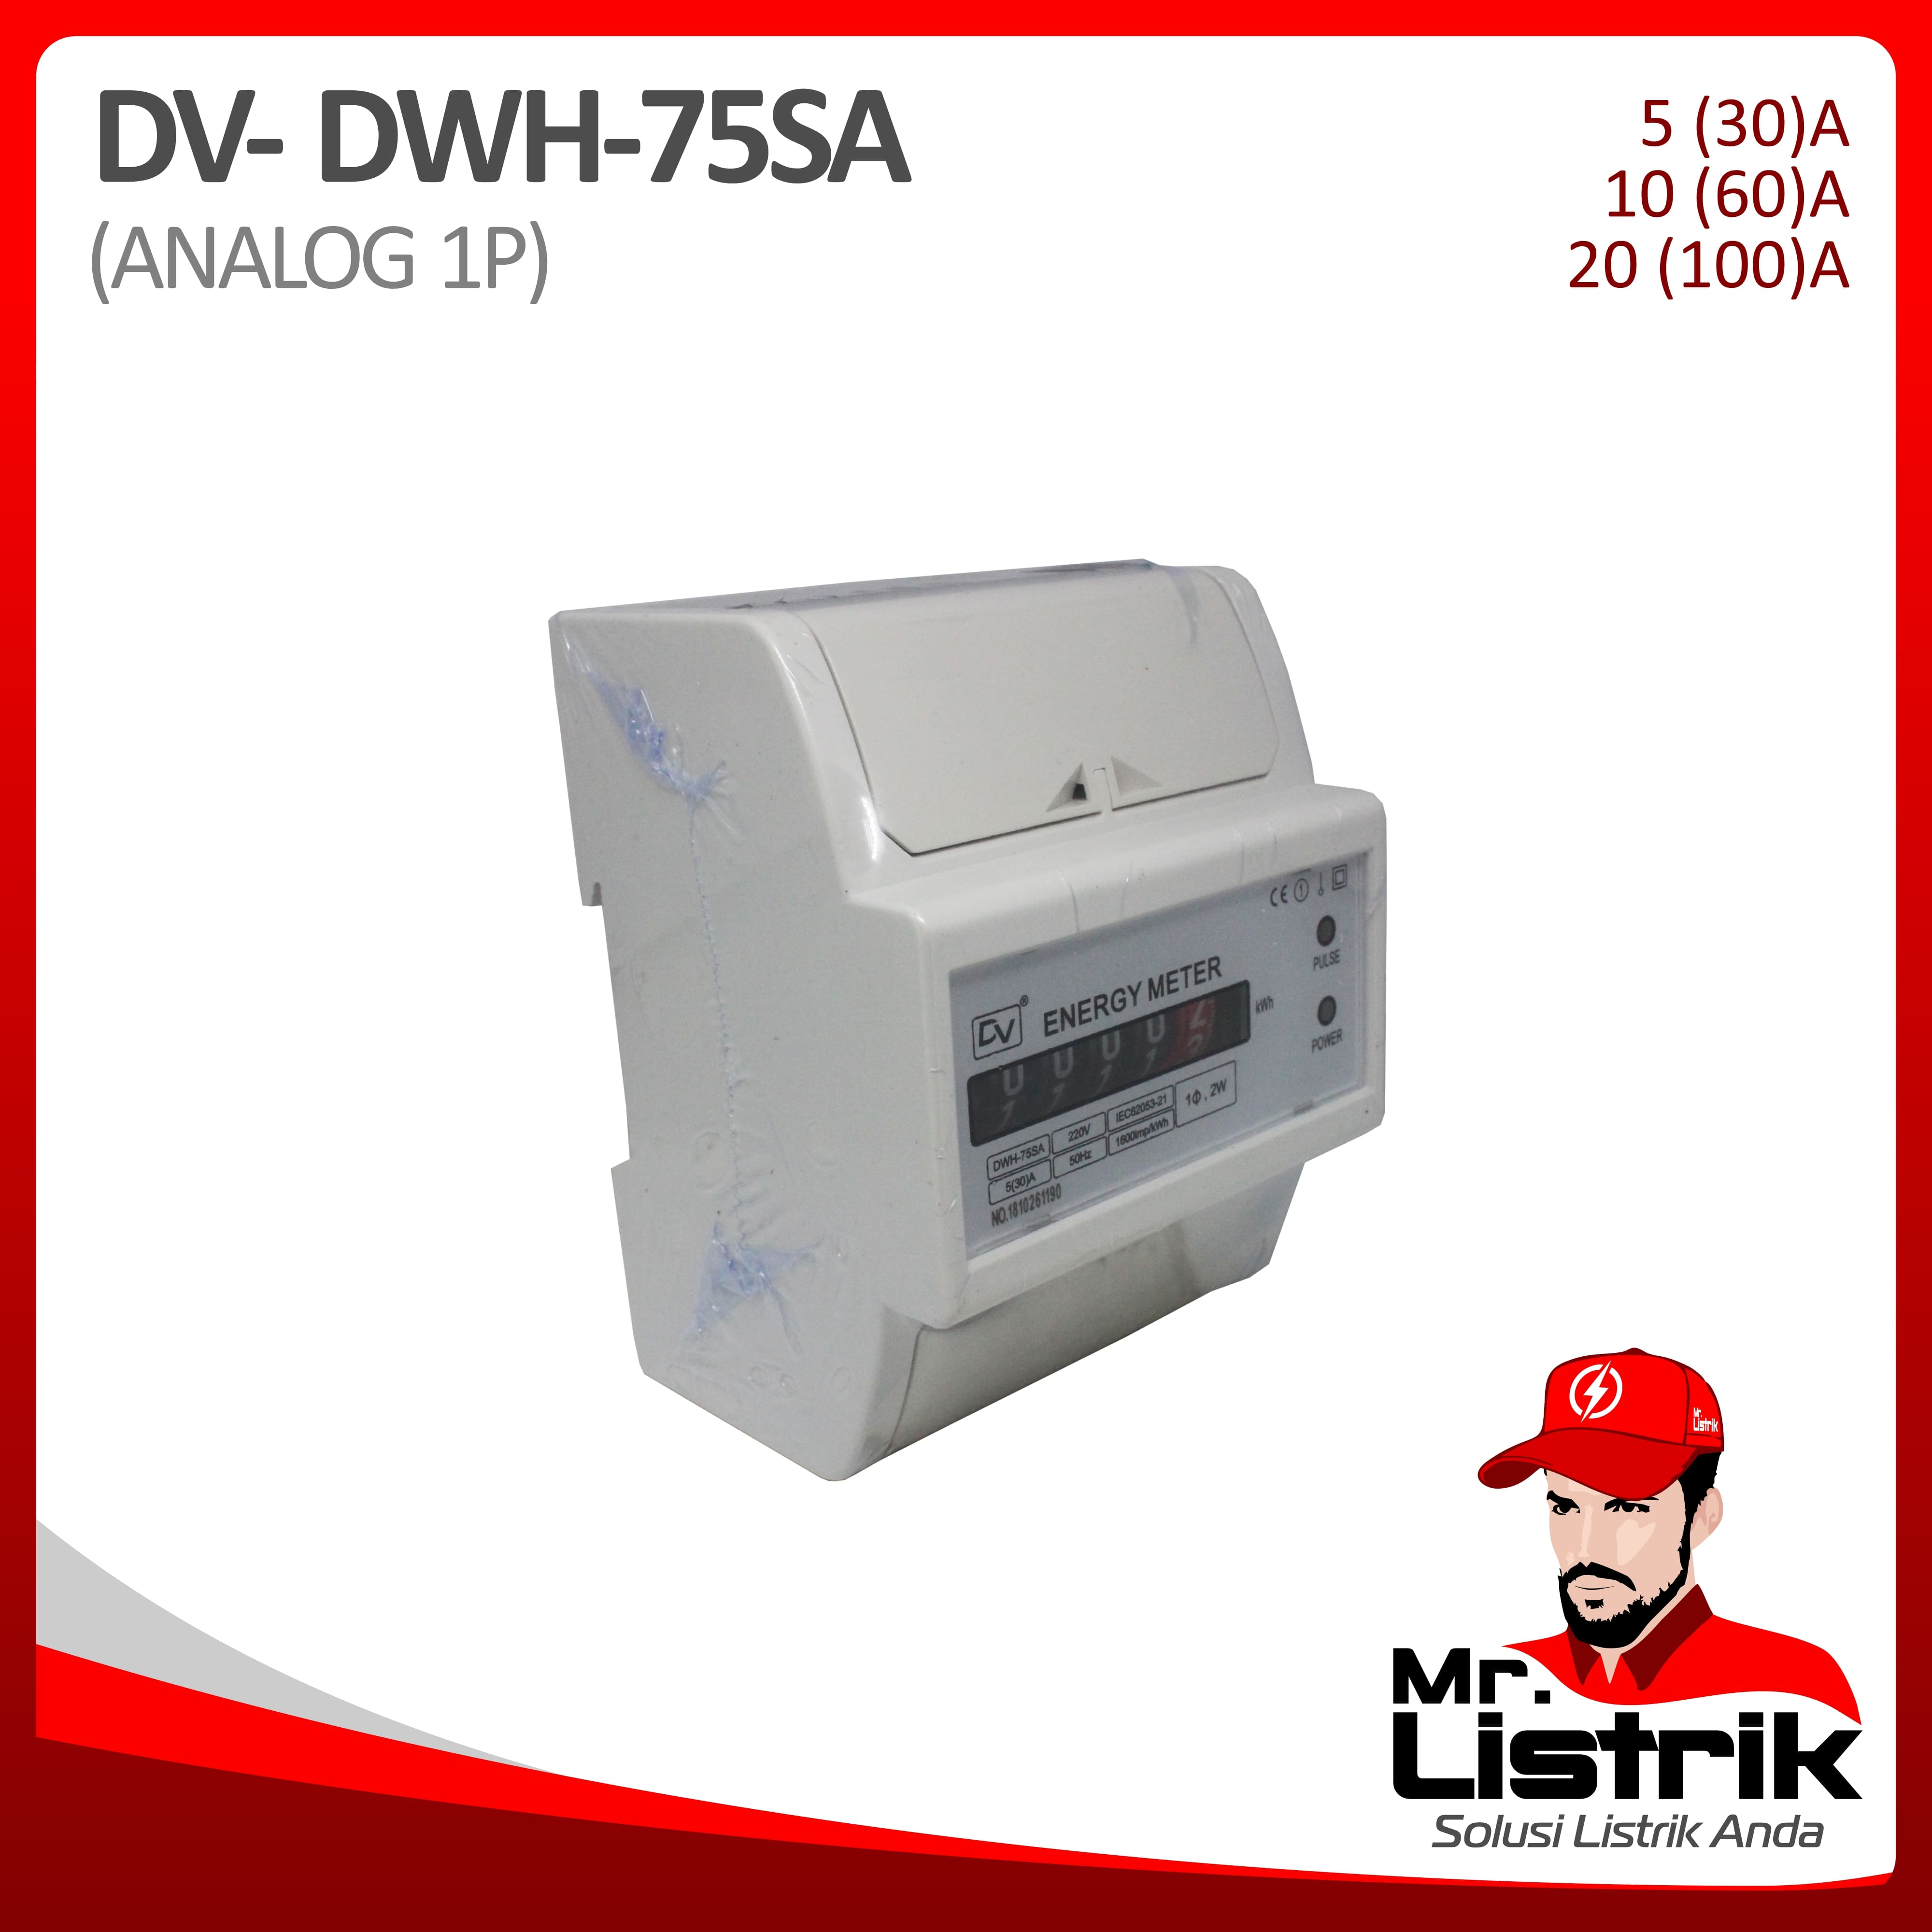 KWH Meter 1P Analog DV DWH-75SA 5(30)A